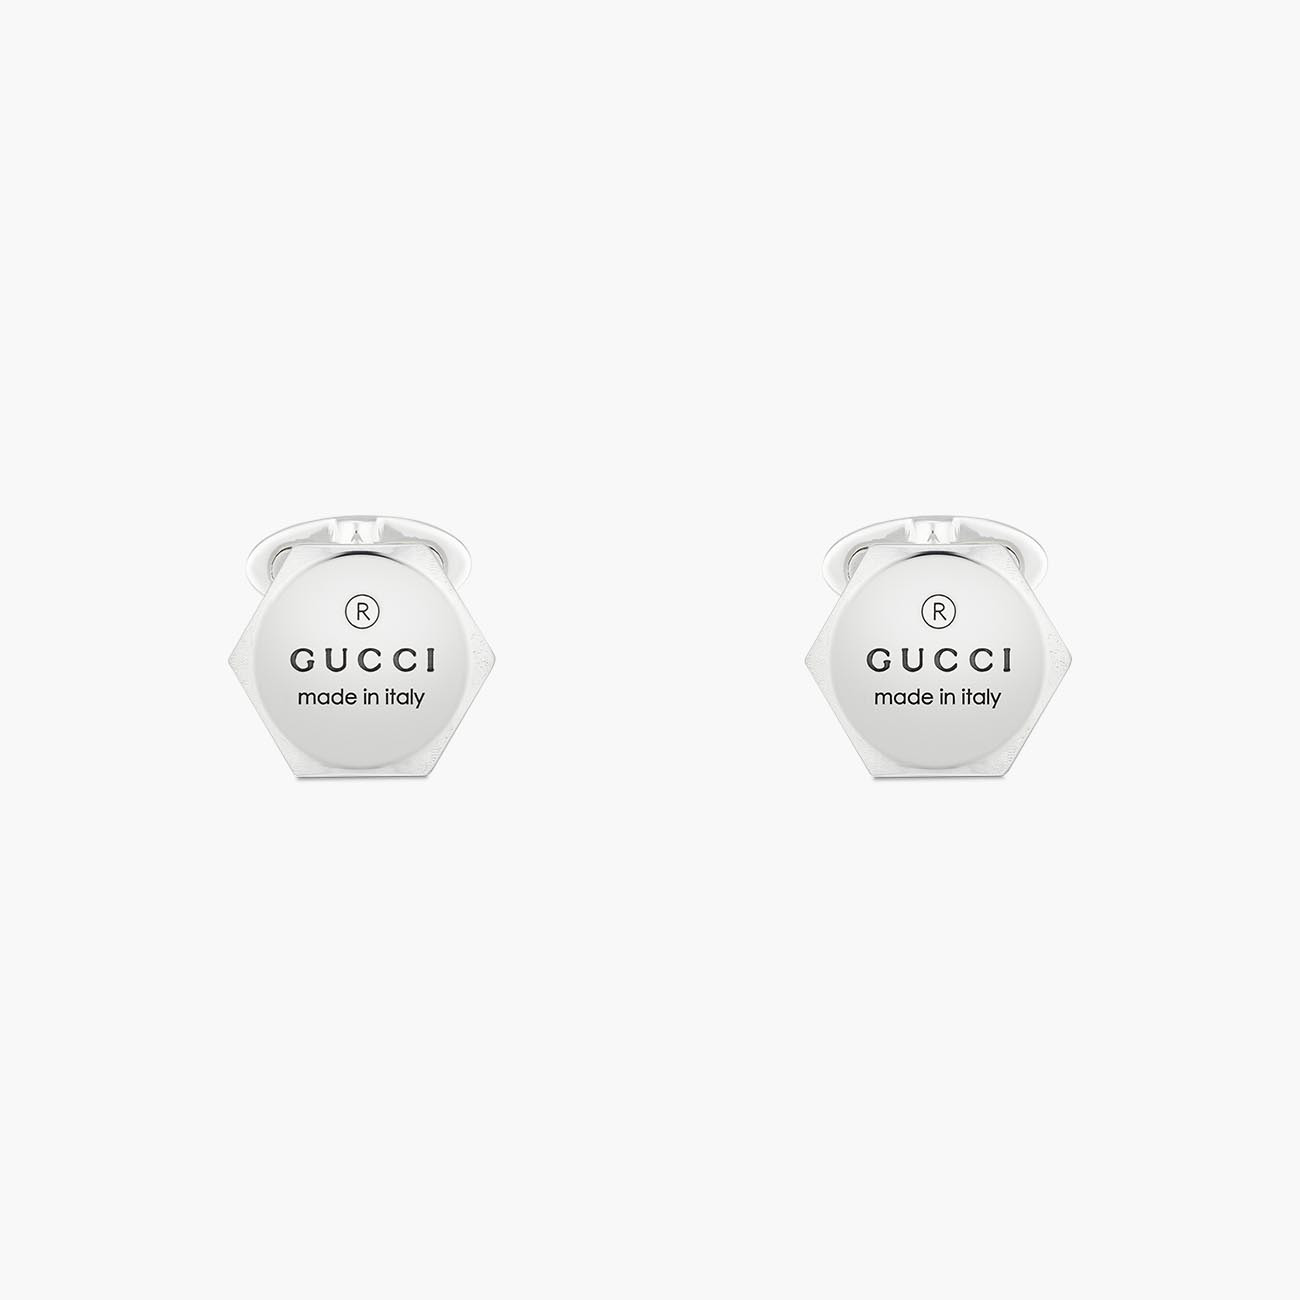 Gucci Trademark Cufflinks